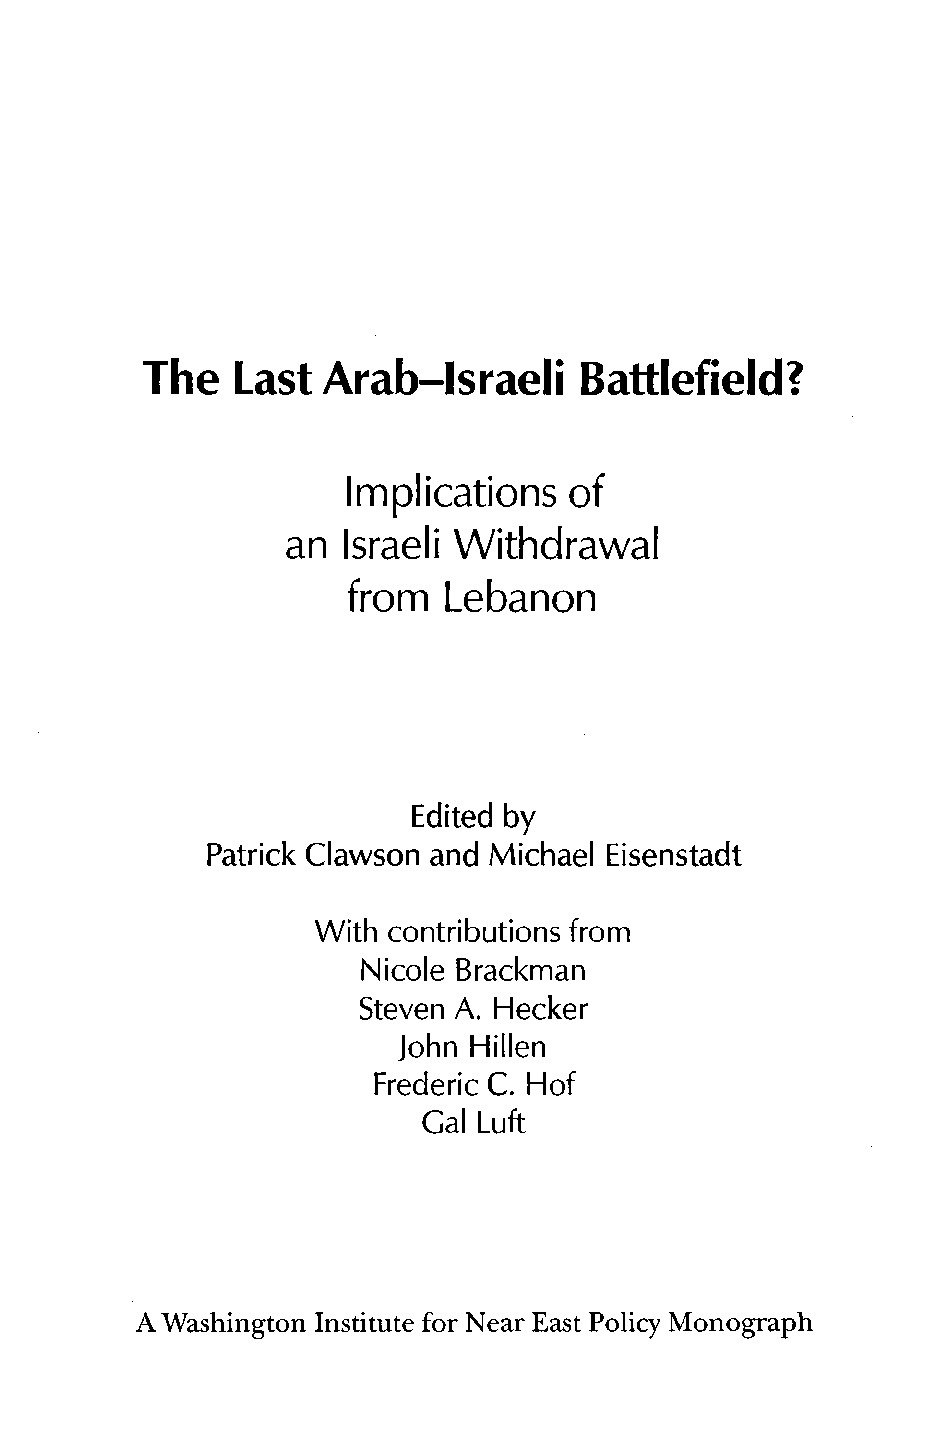 TheLastArabIsraeliBattlefield.pdf.pdf